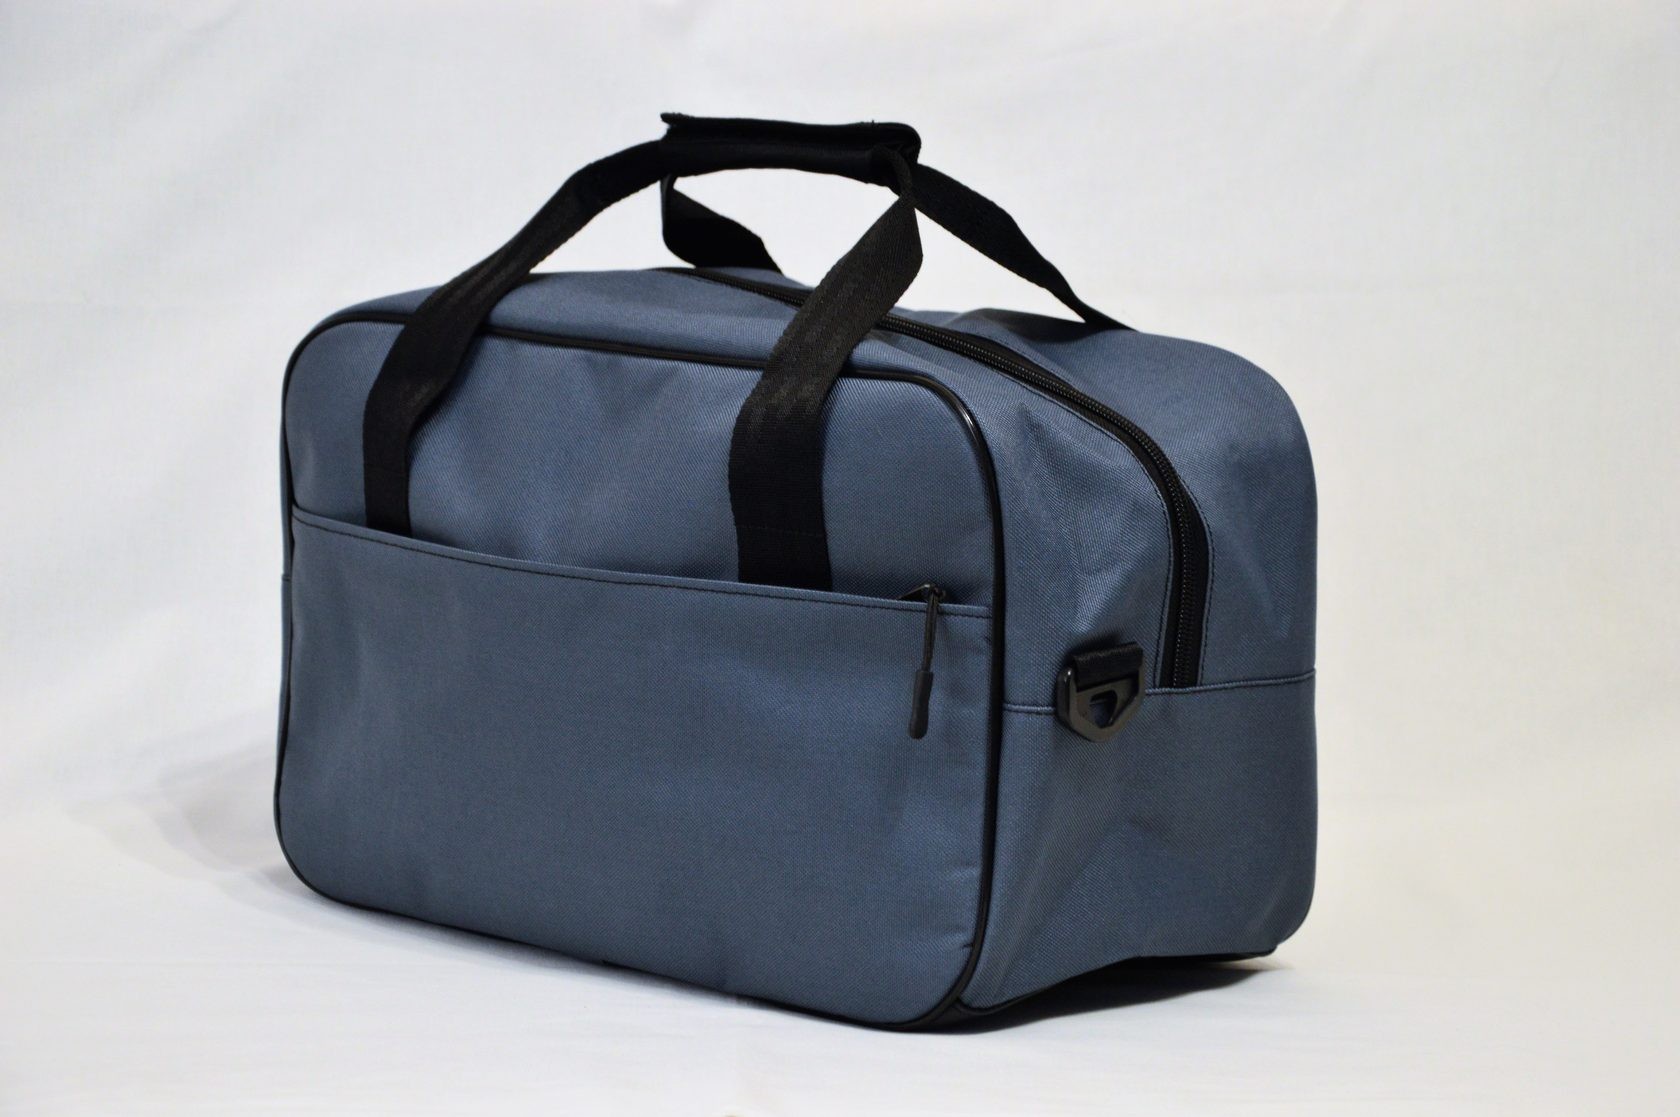 TRVLbag gray | hand luggage | bag 40x20x25 cm